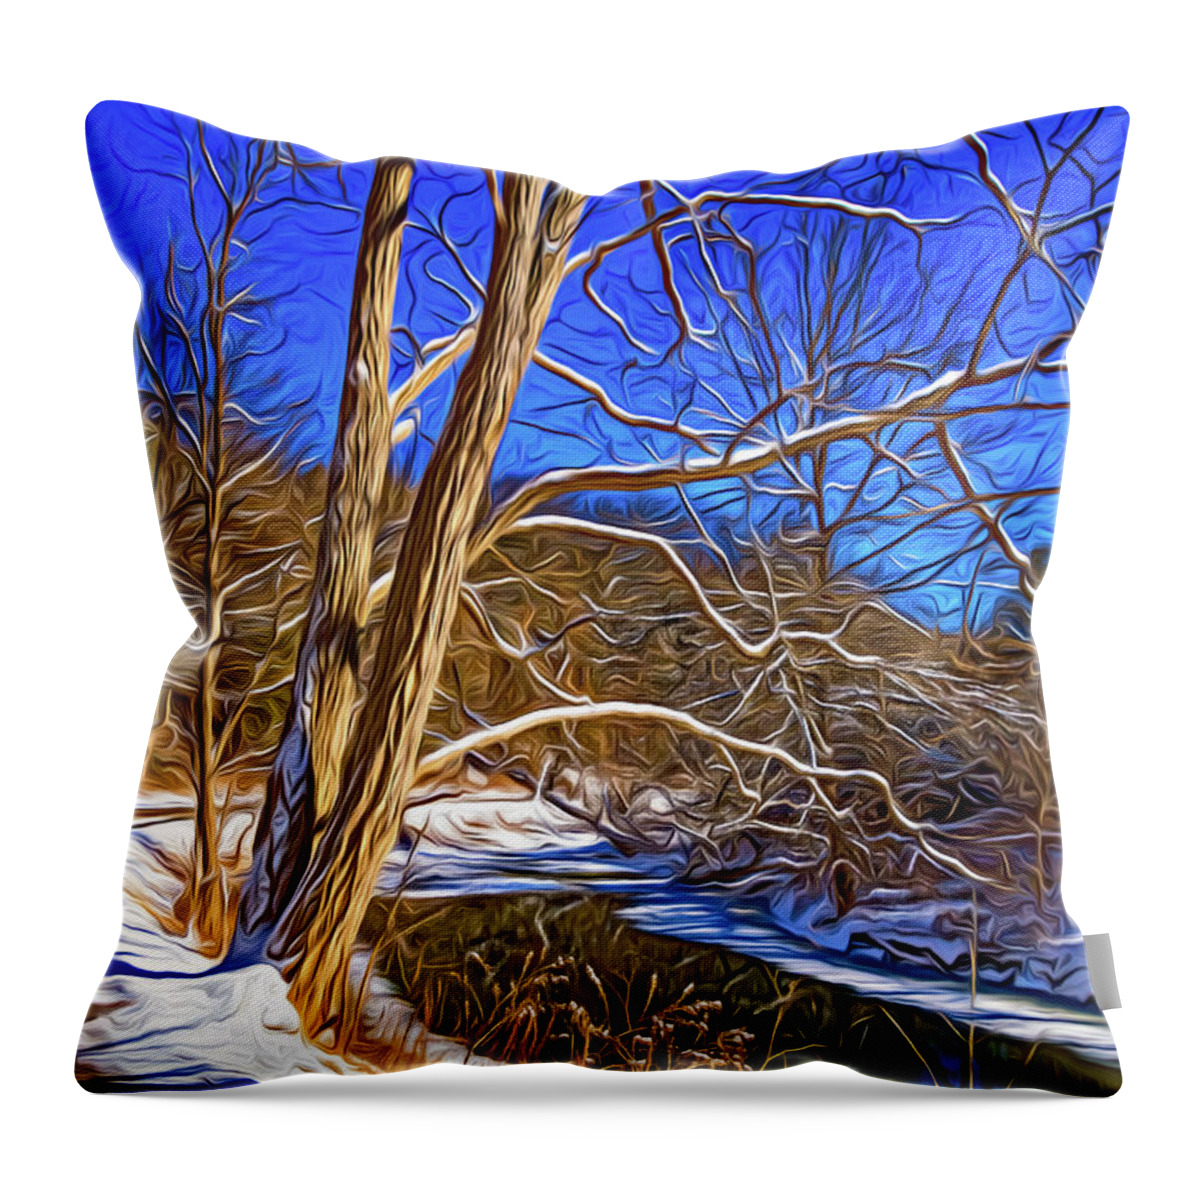 Steve Harrington Throw Pillow featuring the photograph Humber River Winter 7 - Paint by Steve Harrington